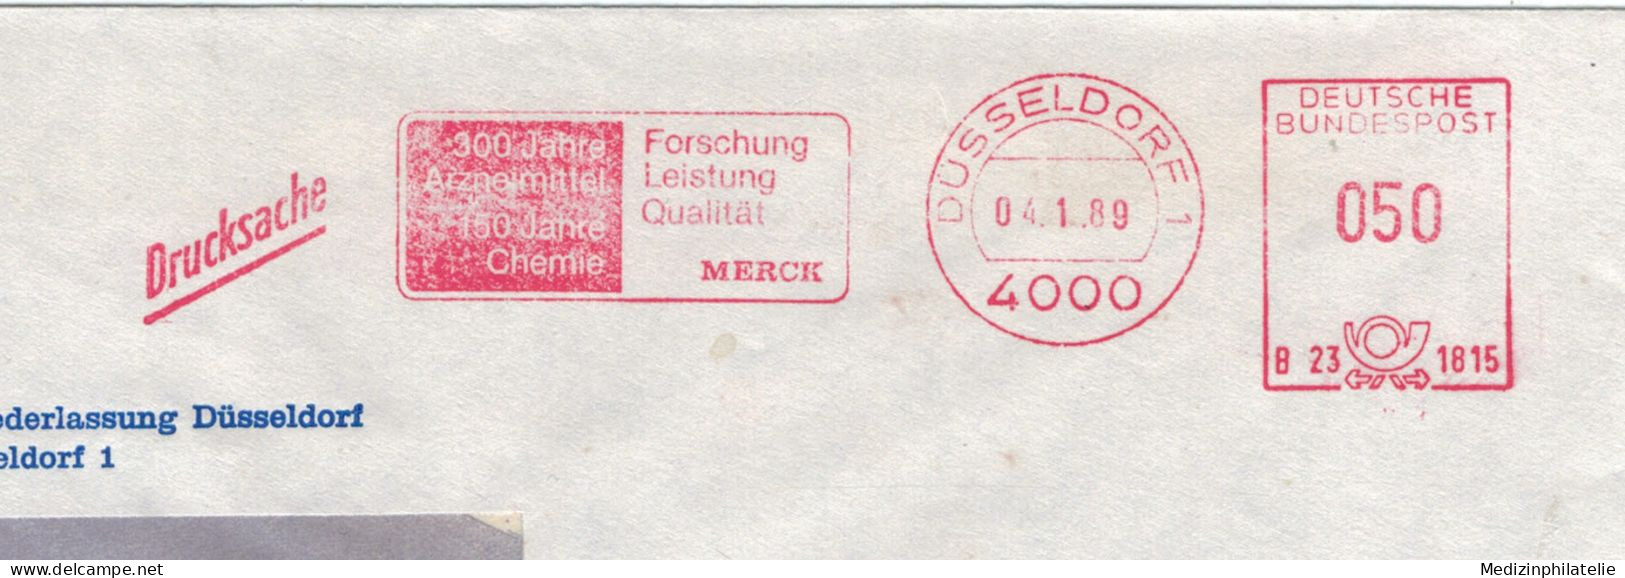 4000 Düsseldorf - Merck Forschung Leistung Qualität - Arzneimittel Chemie 1989 - Farmacia